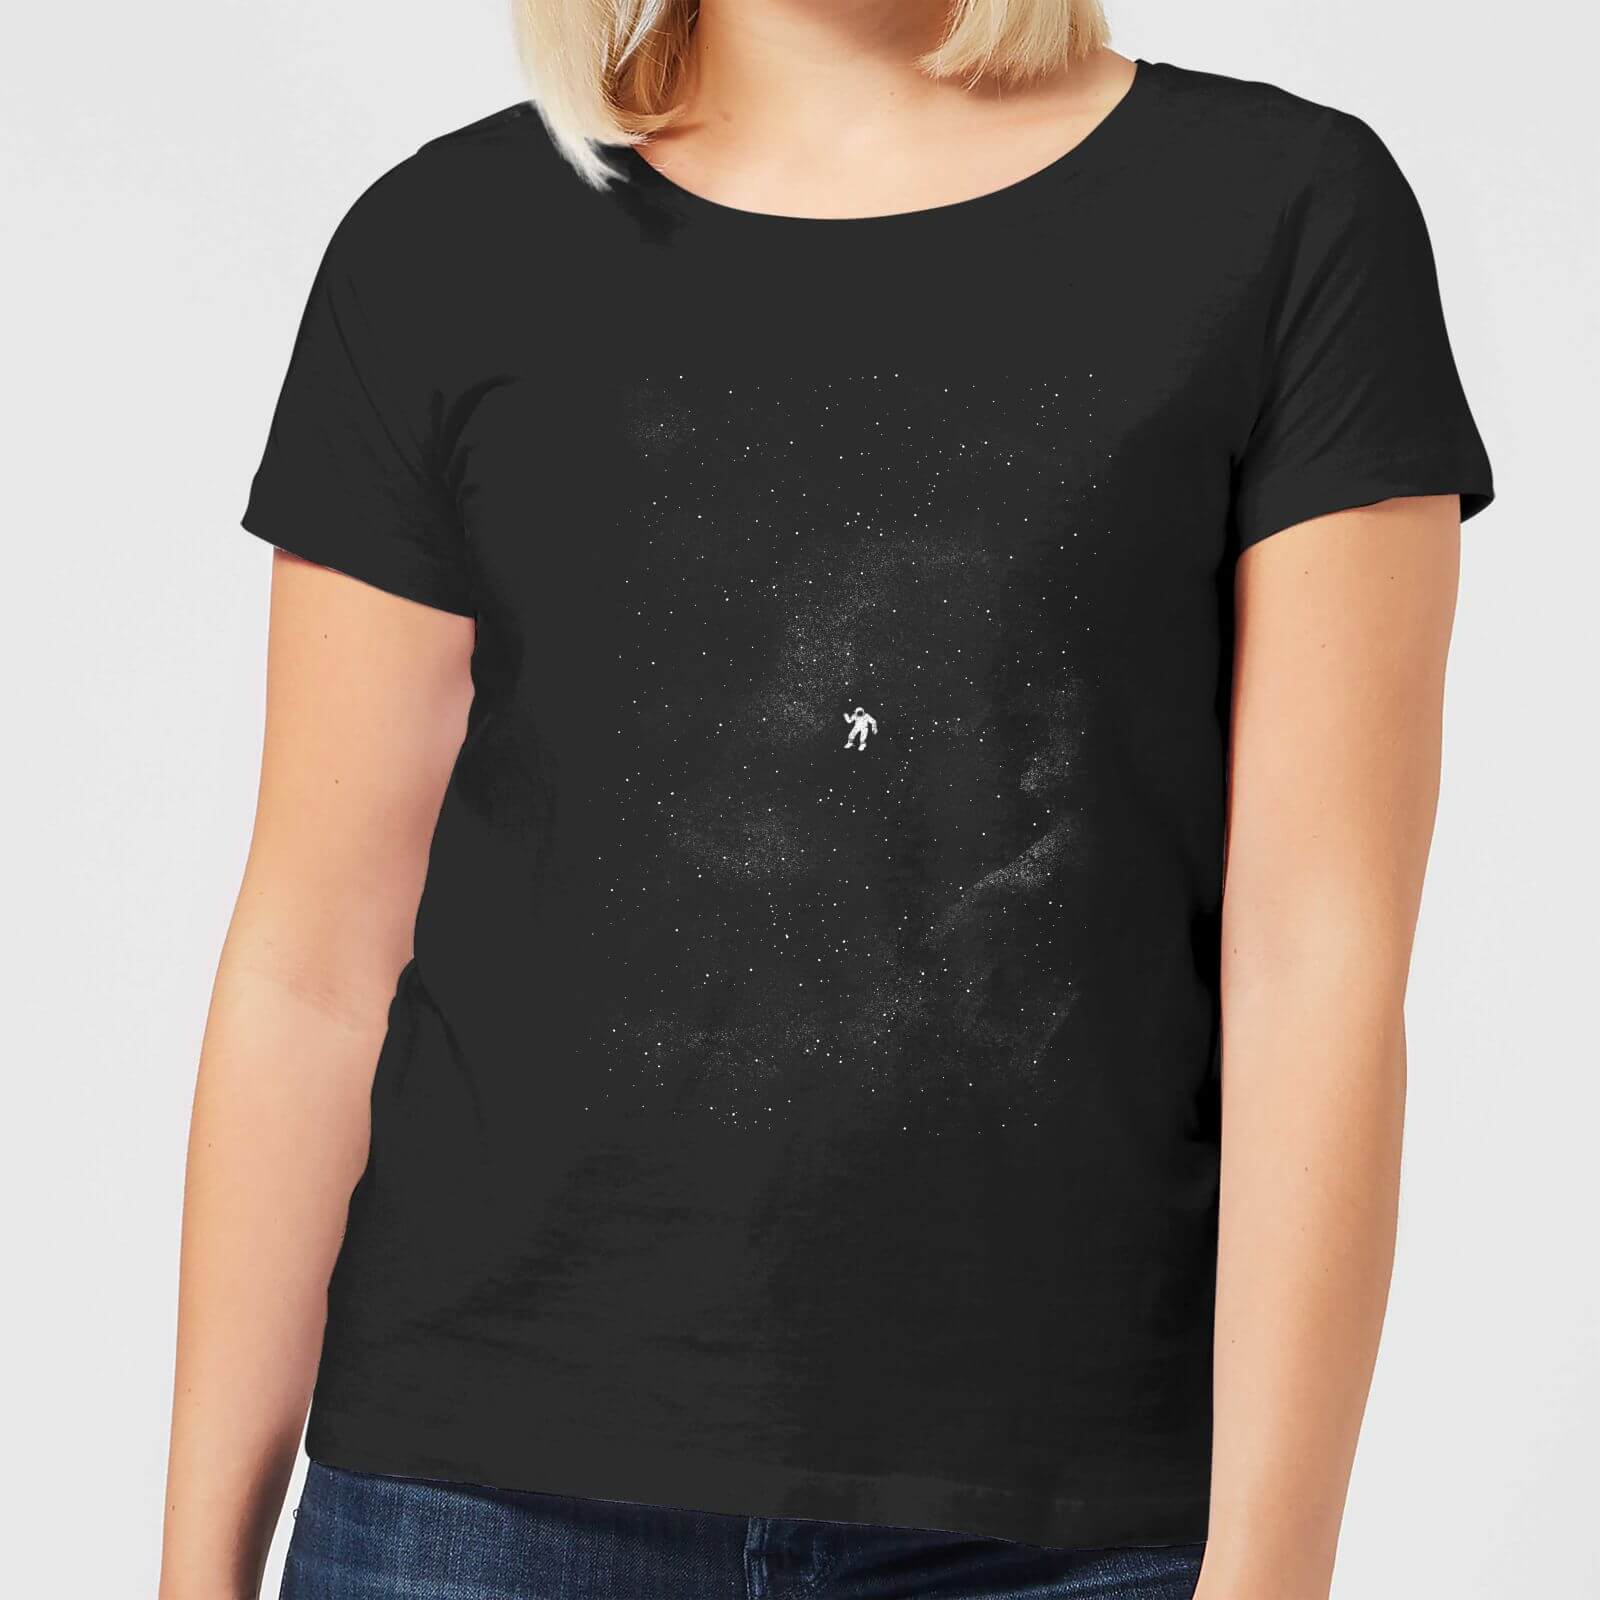 Gravity Women's T-Shirt - Black - S - Black